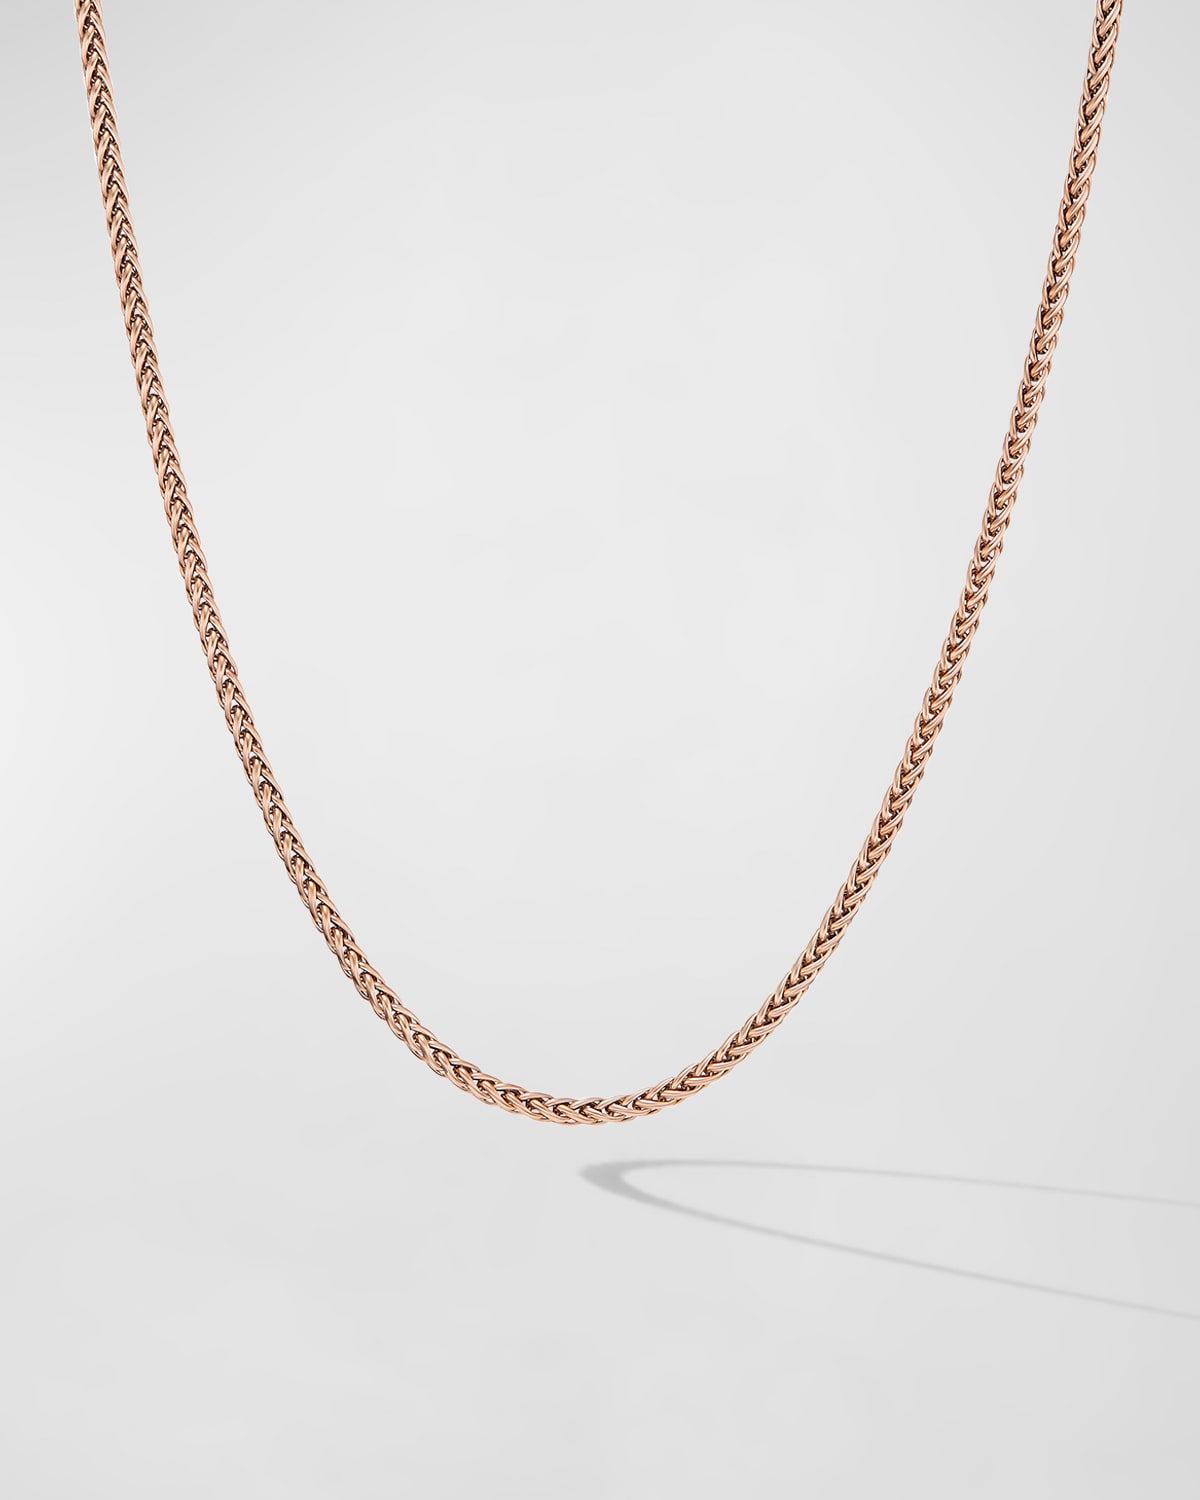 David Yurman Men's Wheat Chain Necklace in 18K Rose Gold, 2.5mm, 24"L